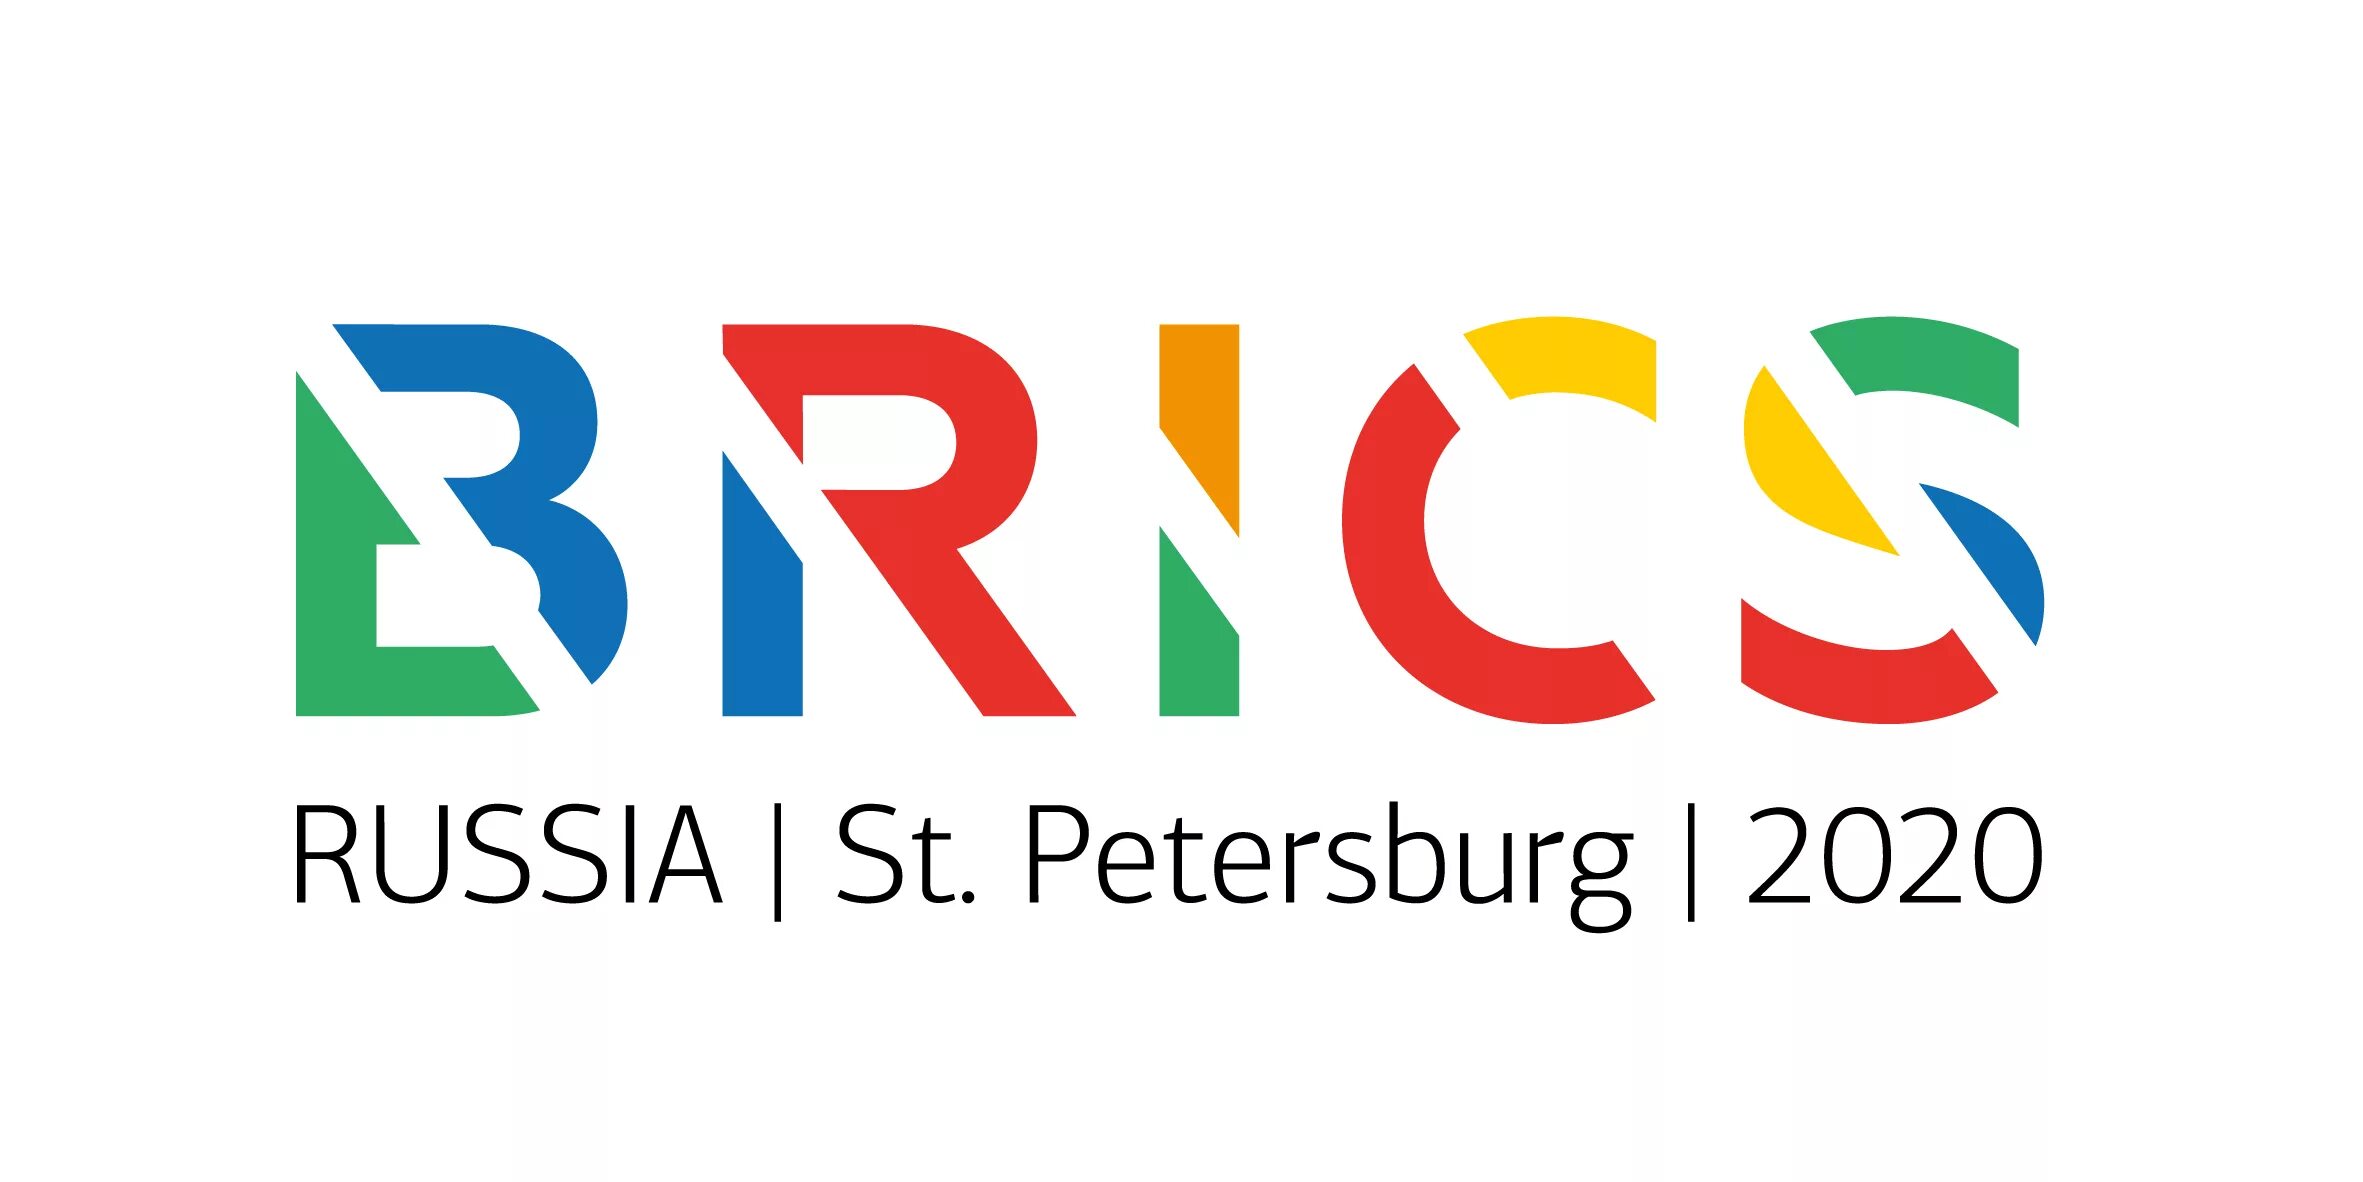 Брикс сайт. Значок БРИКС. Страны БРИКС логотип. Саммит БРИКС 2021. БРИКС 2020 логотип.